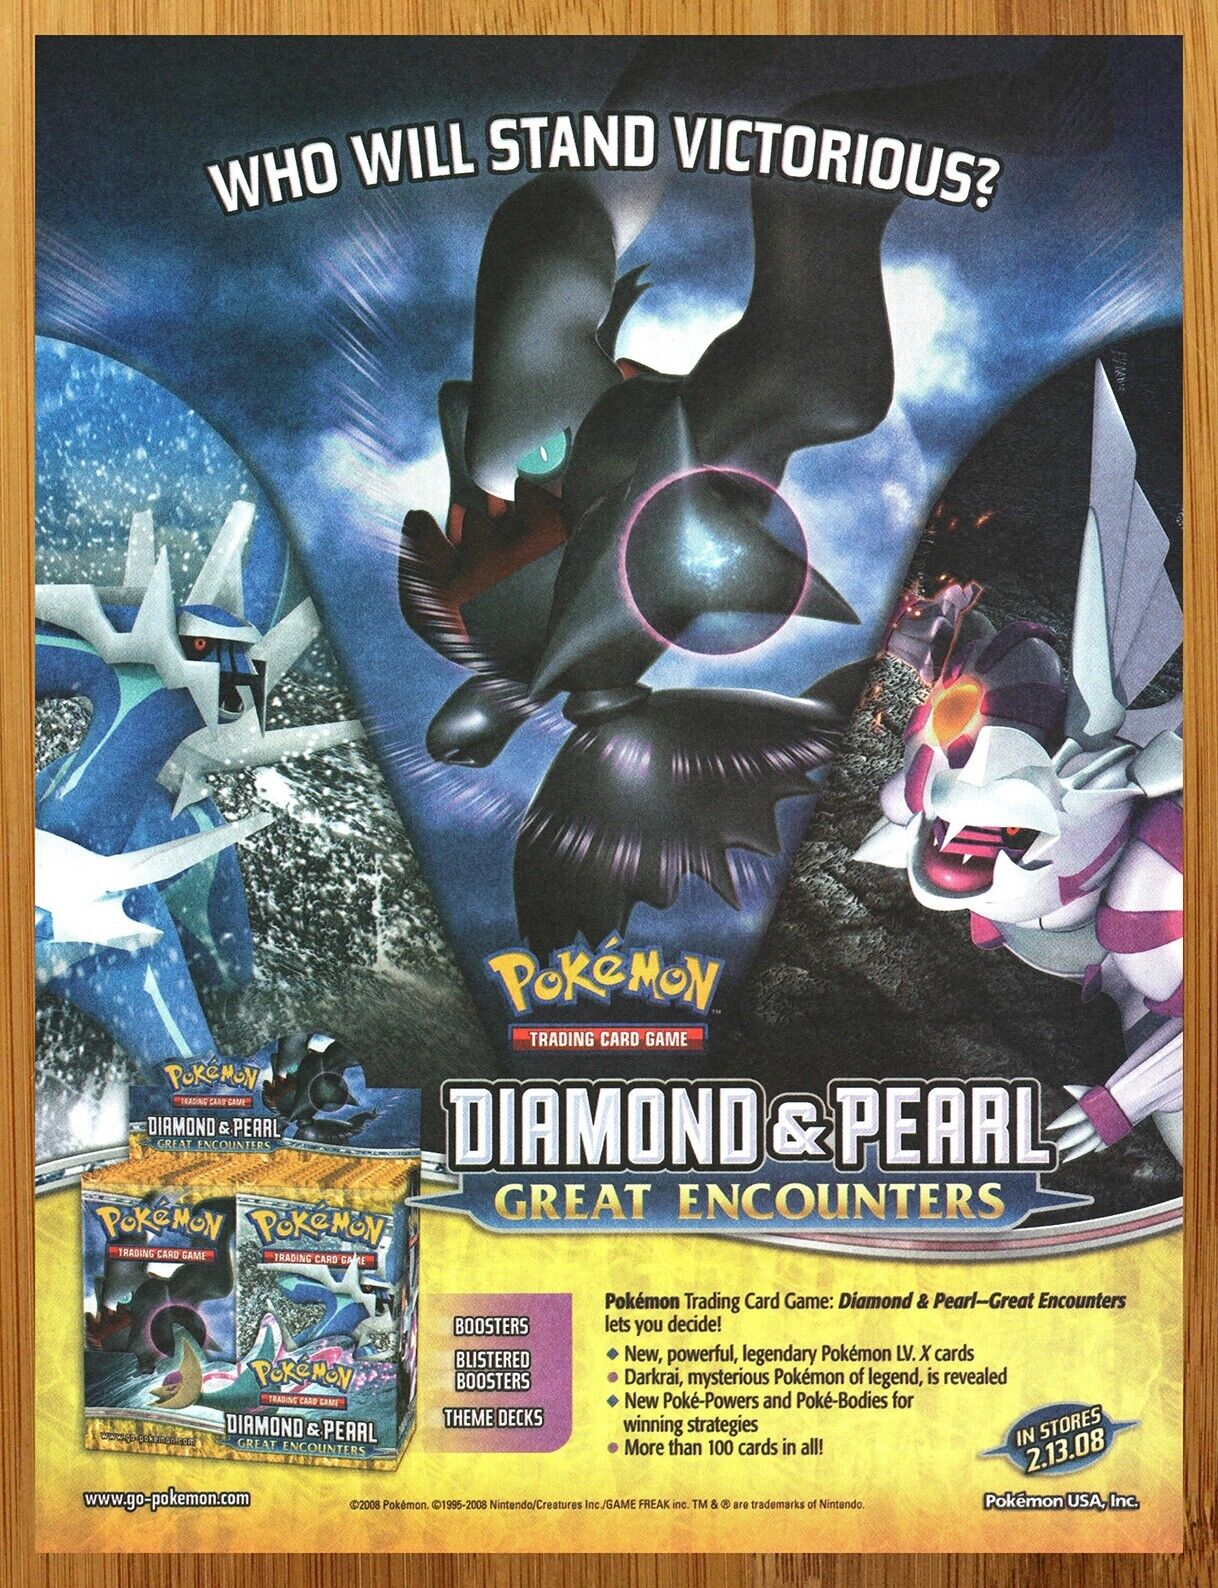 2008 Pokemon TCG Diamond & Pearl Great Encounters Print Ad/Poster Card Wall Art